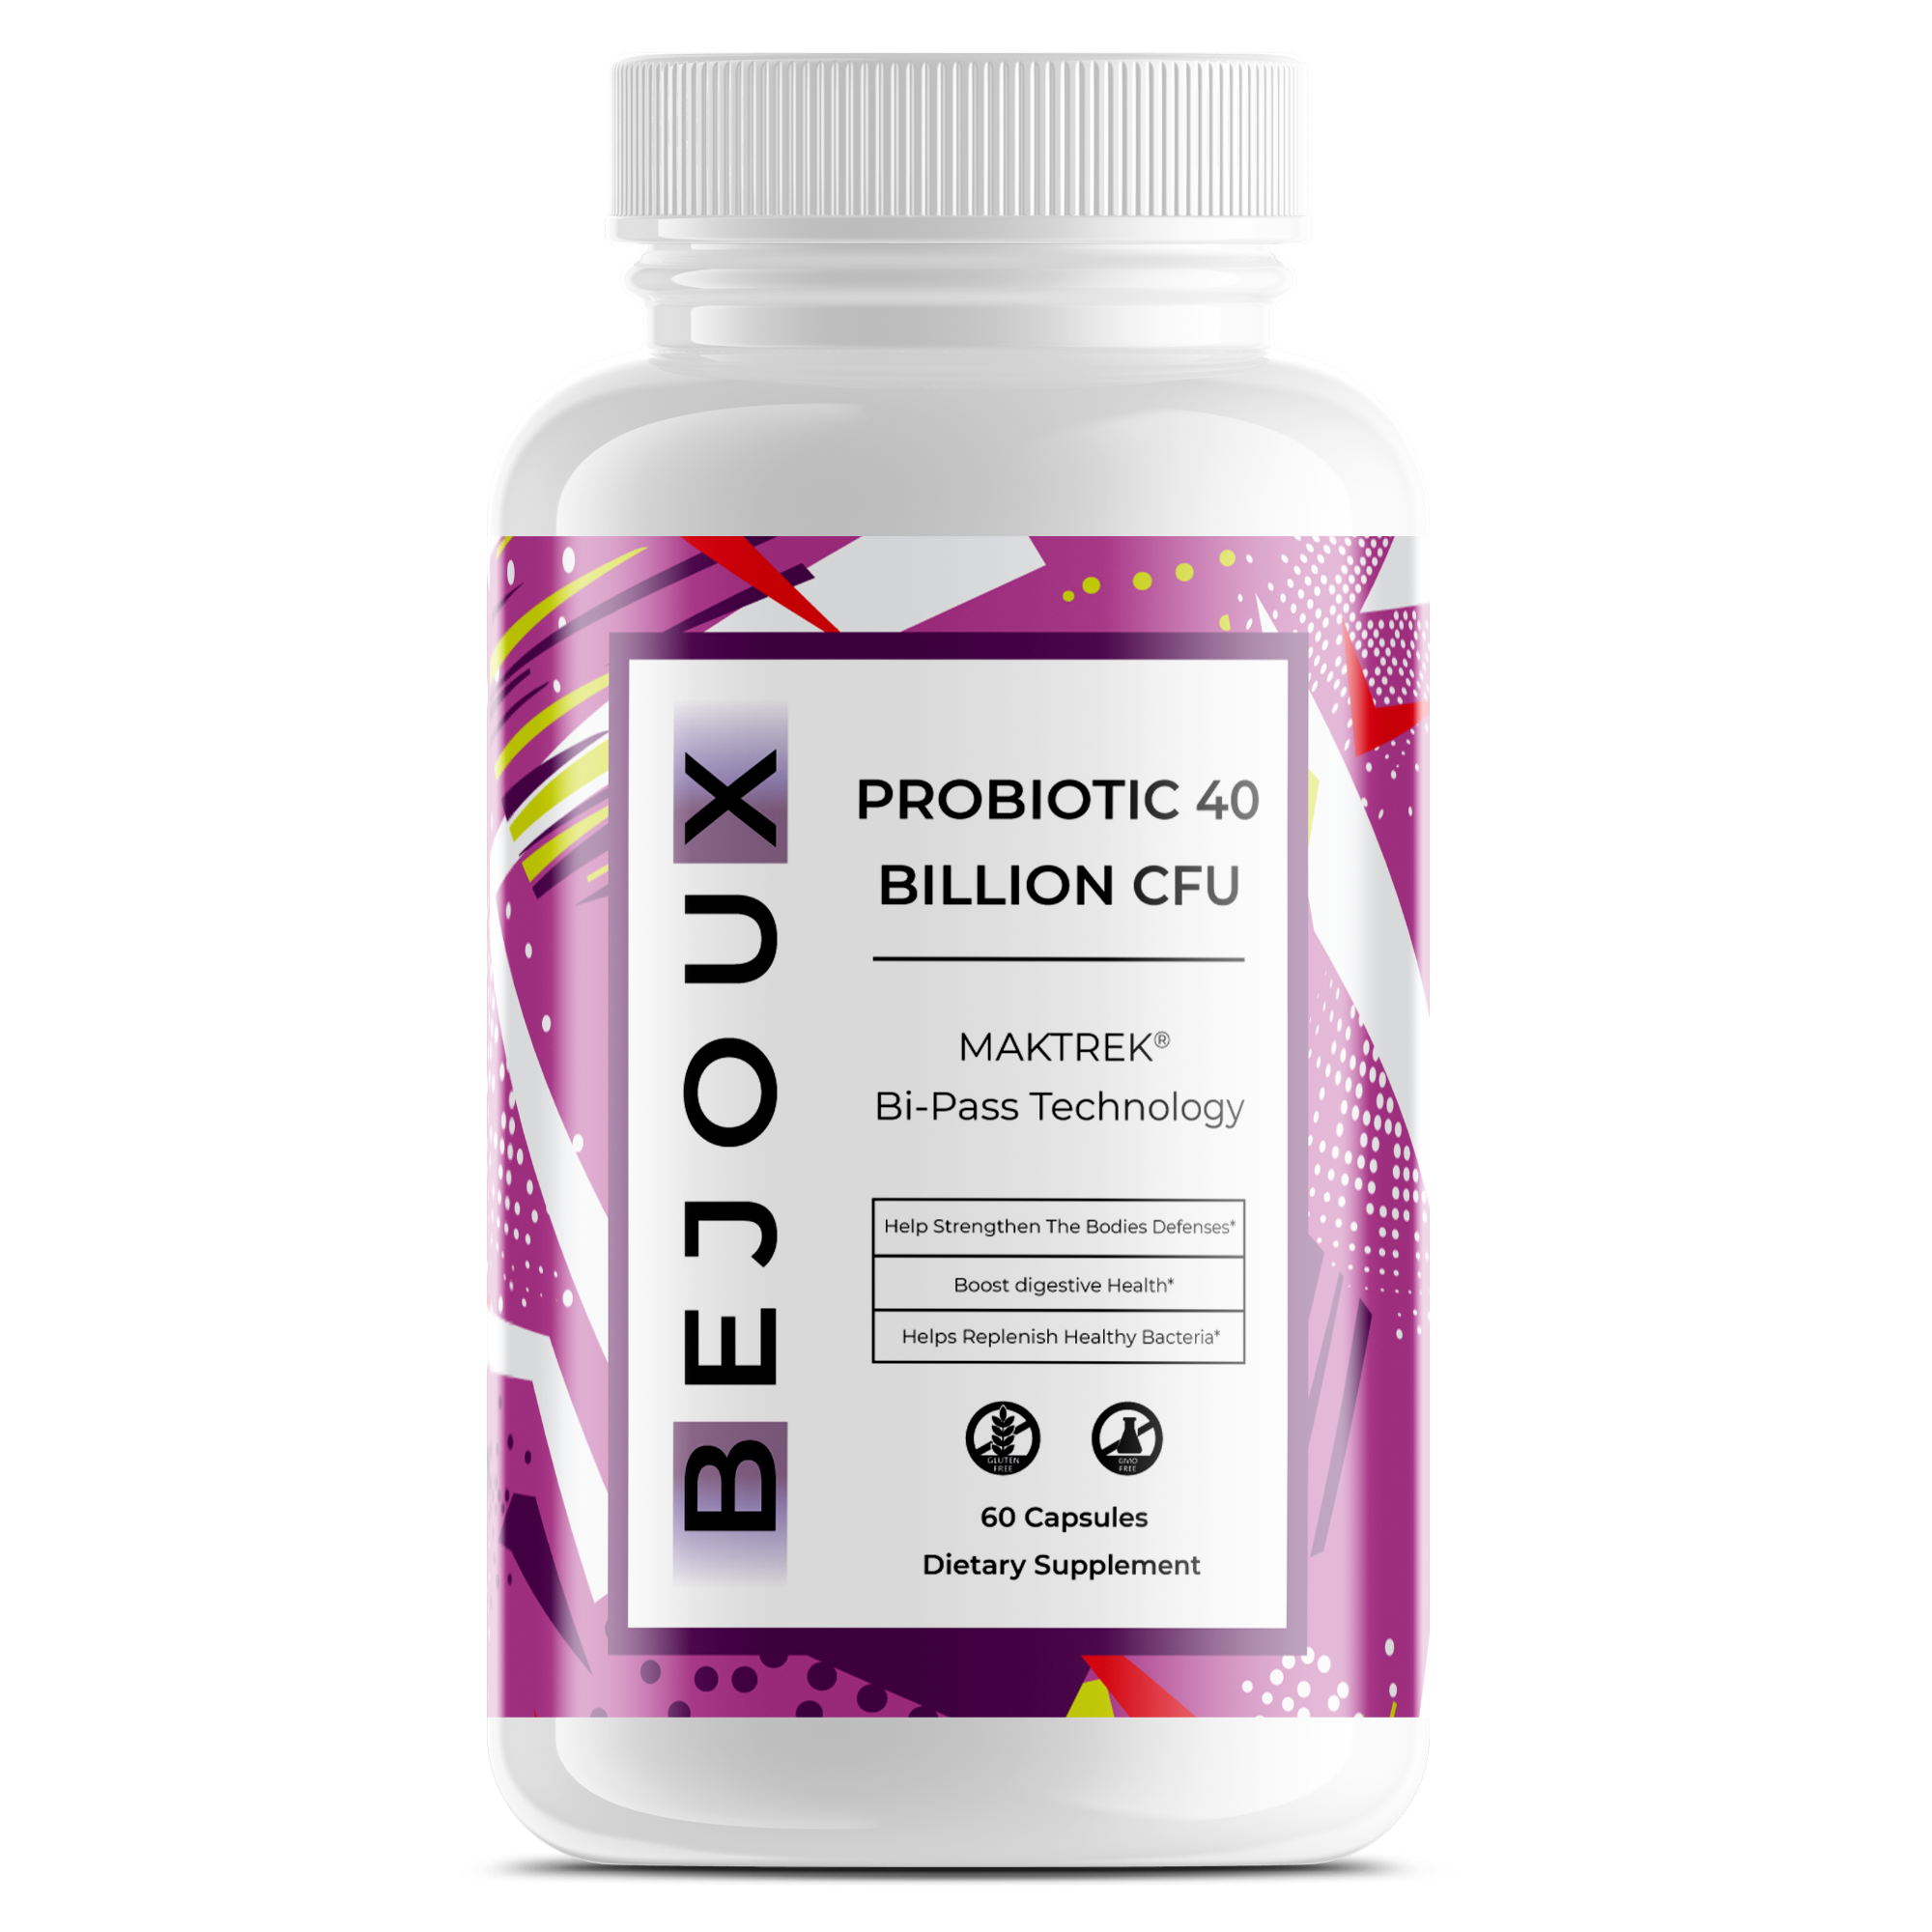 Prime Probiotic Formula - Get Your Life!